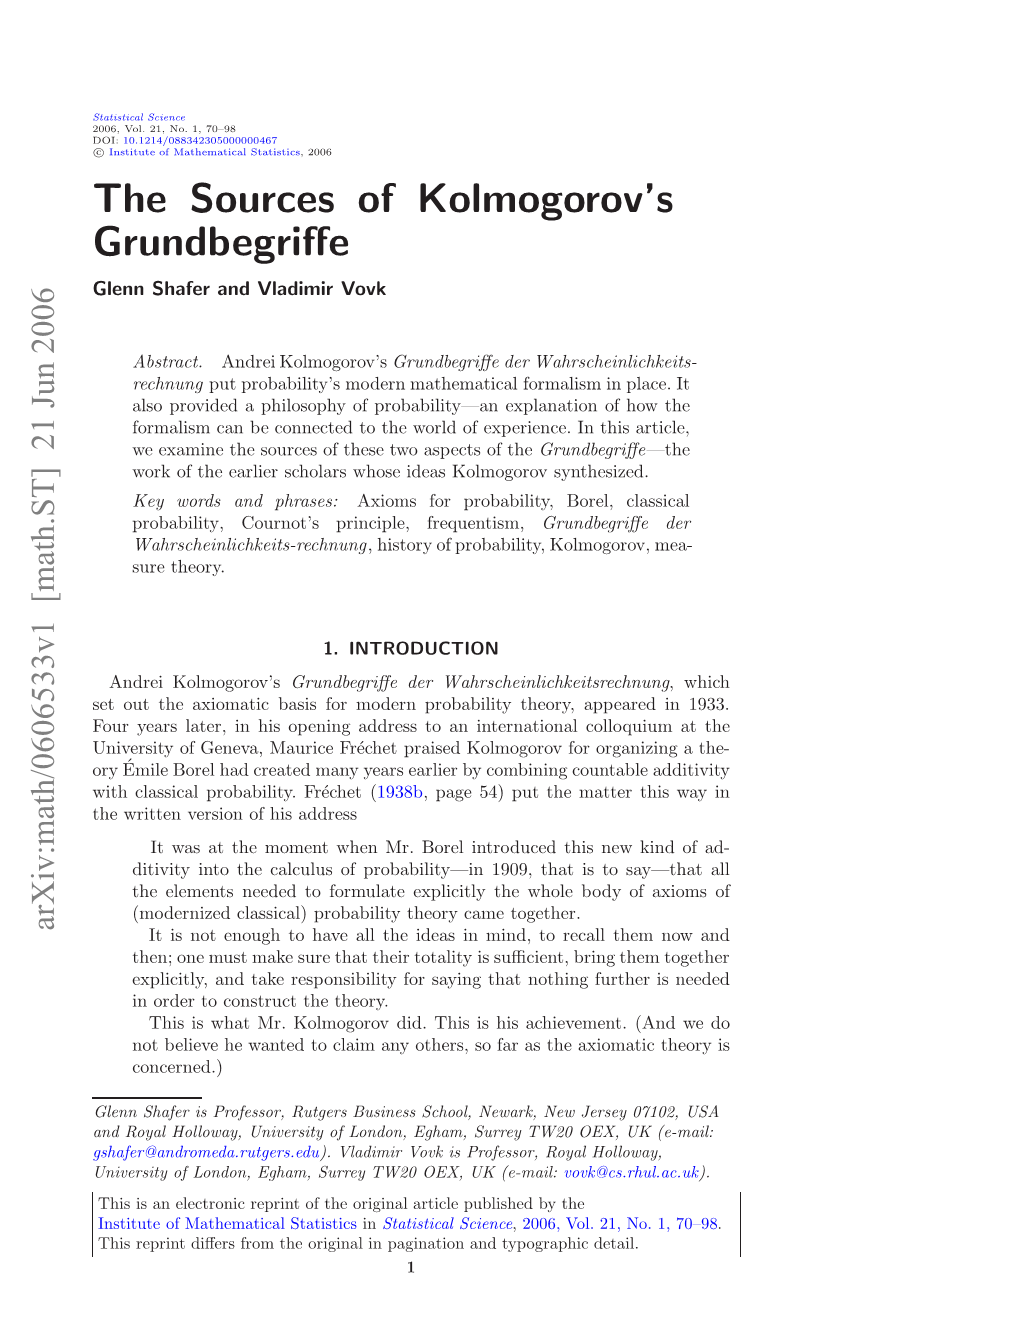 The Sources of Kolmogorov's Grundbegriffe